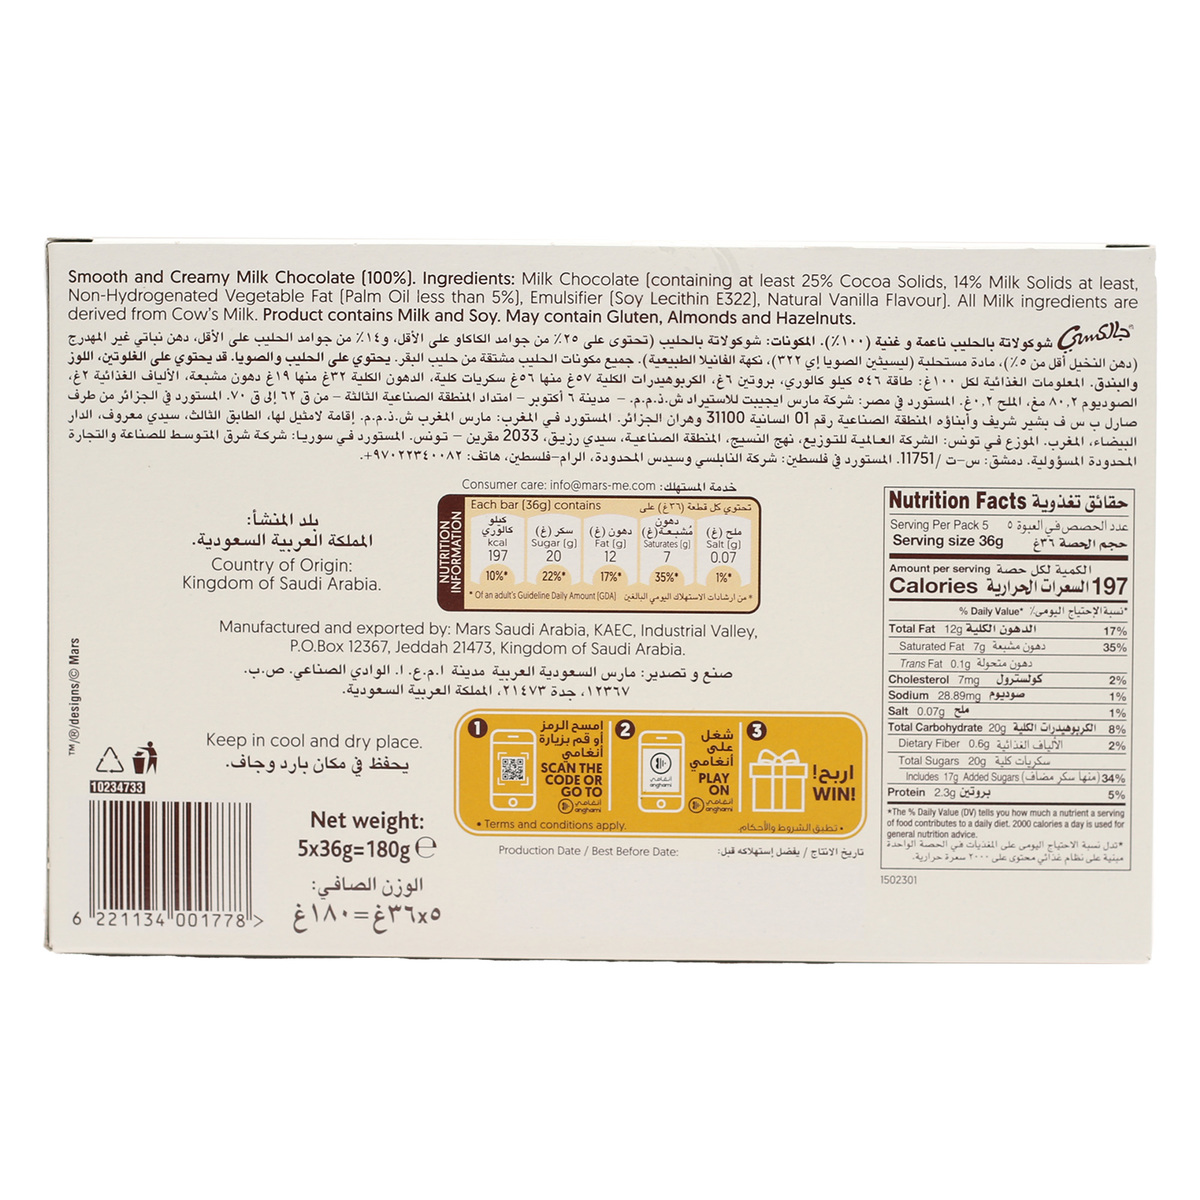 Galaxy Smooth Milk Chocolate Value Pack 5 x 36 g 2 pkt